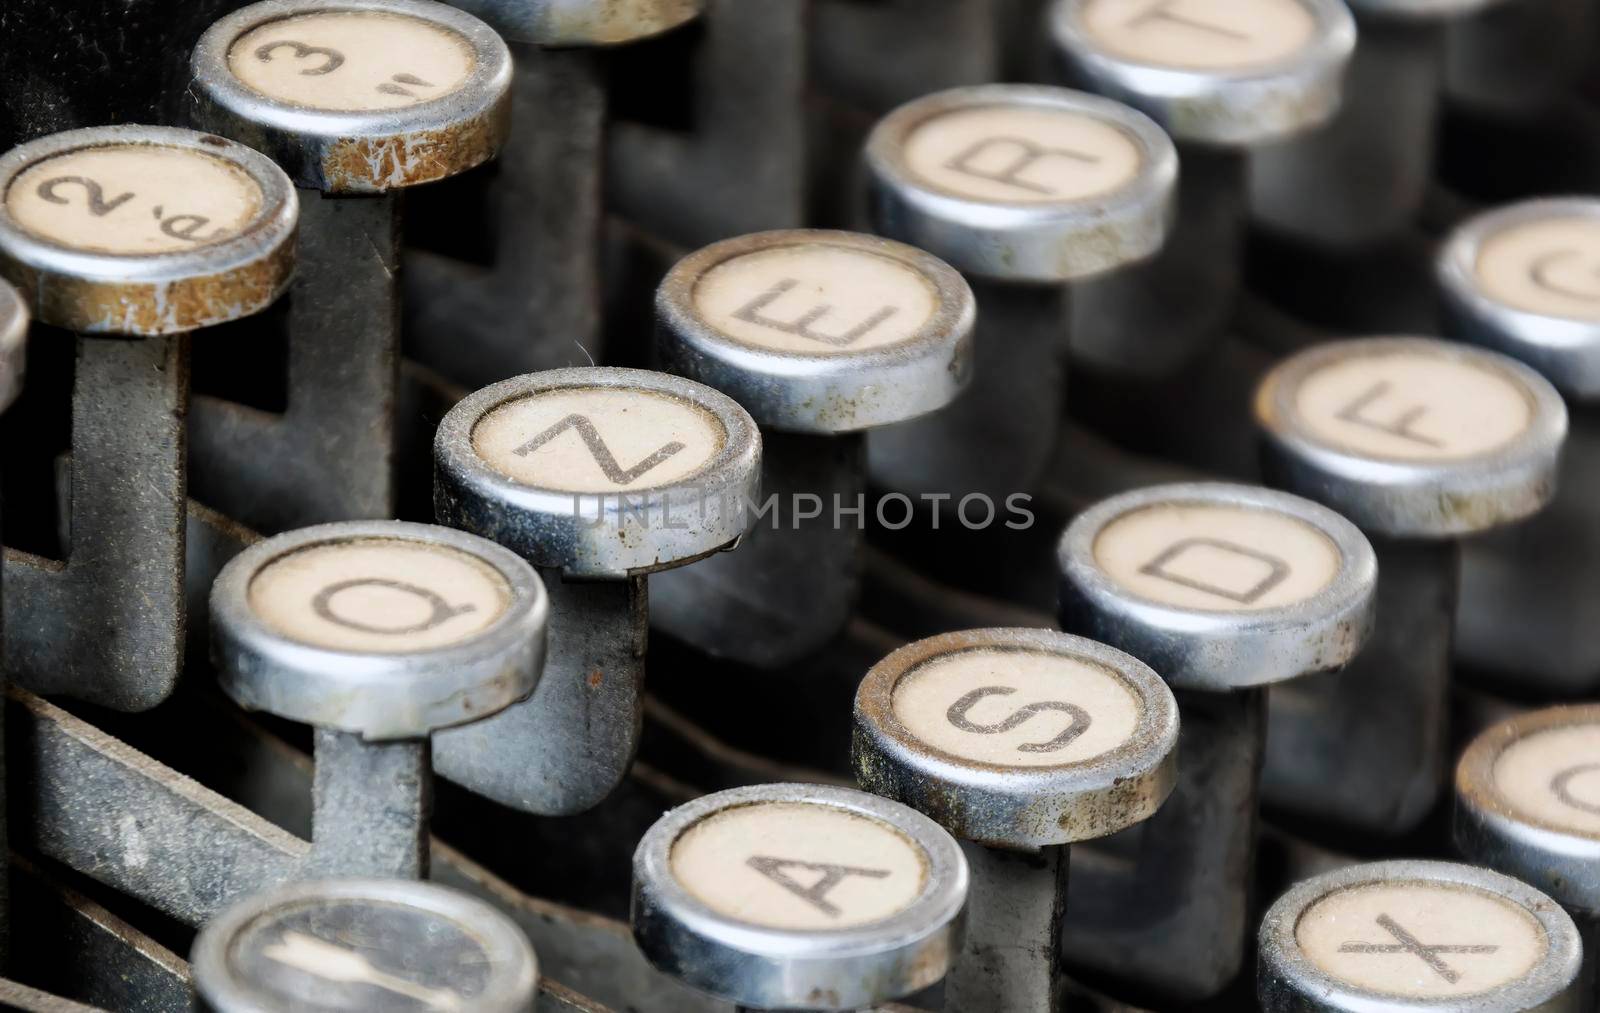 Keys of an old typewriter by rarrarorro